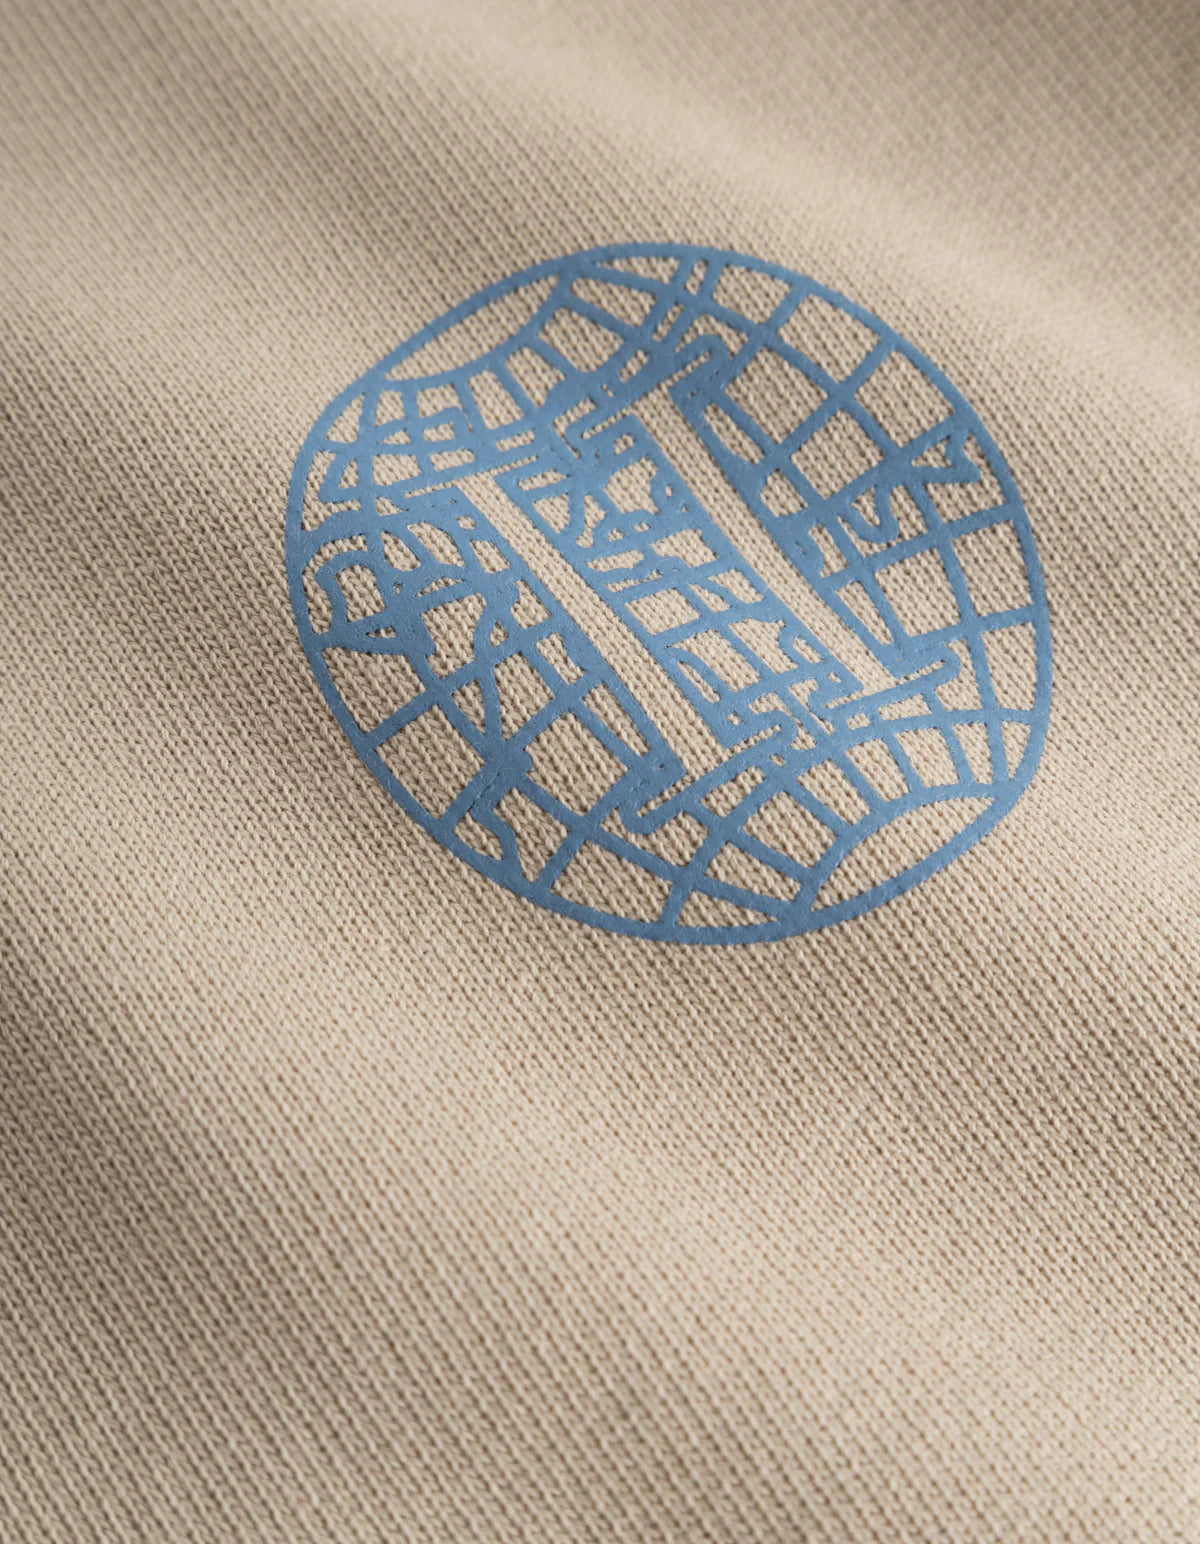 LES DEUX | Globe Sweatshirt Sand